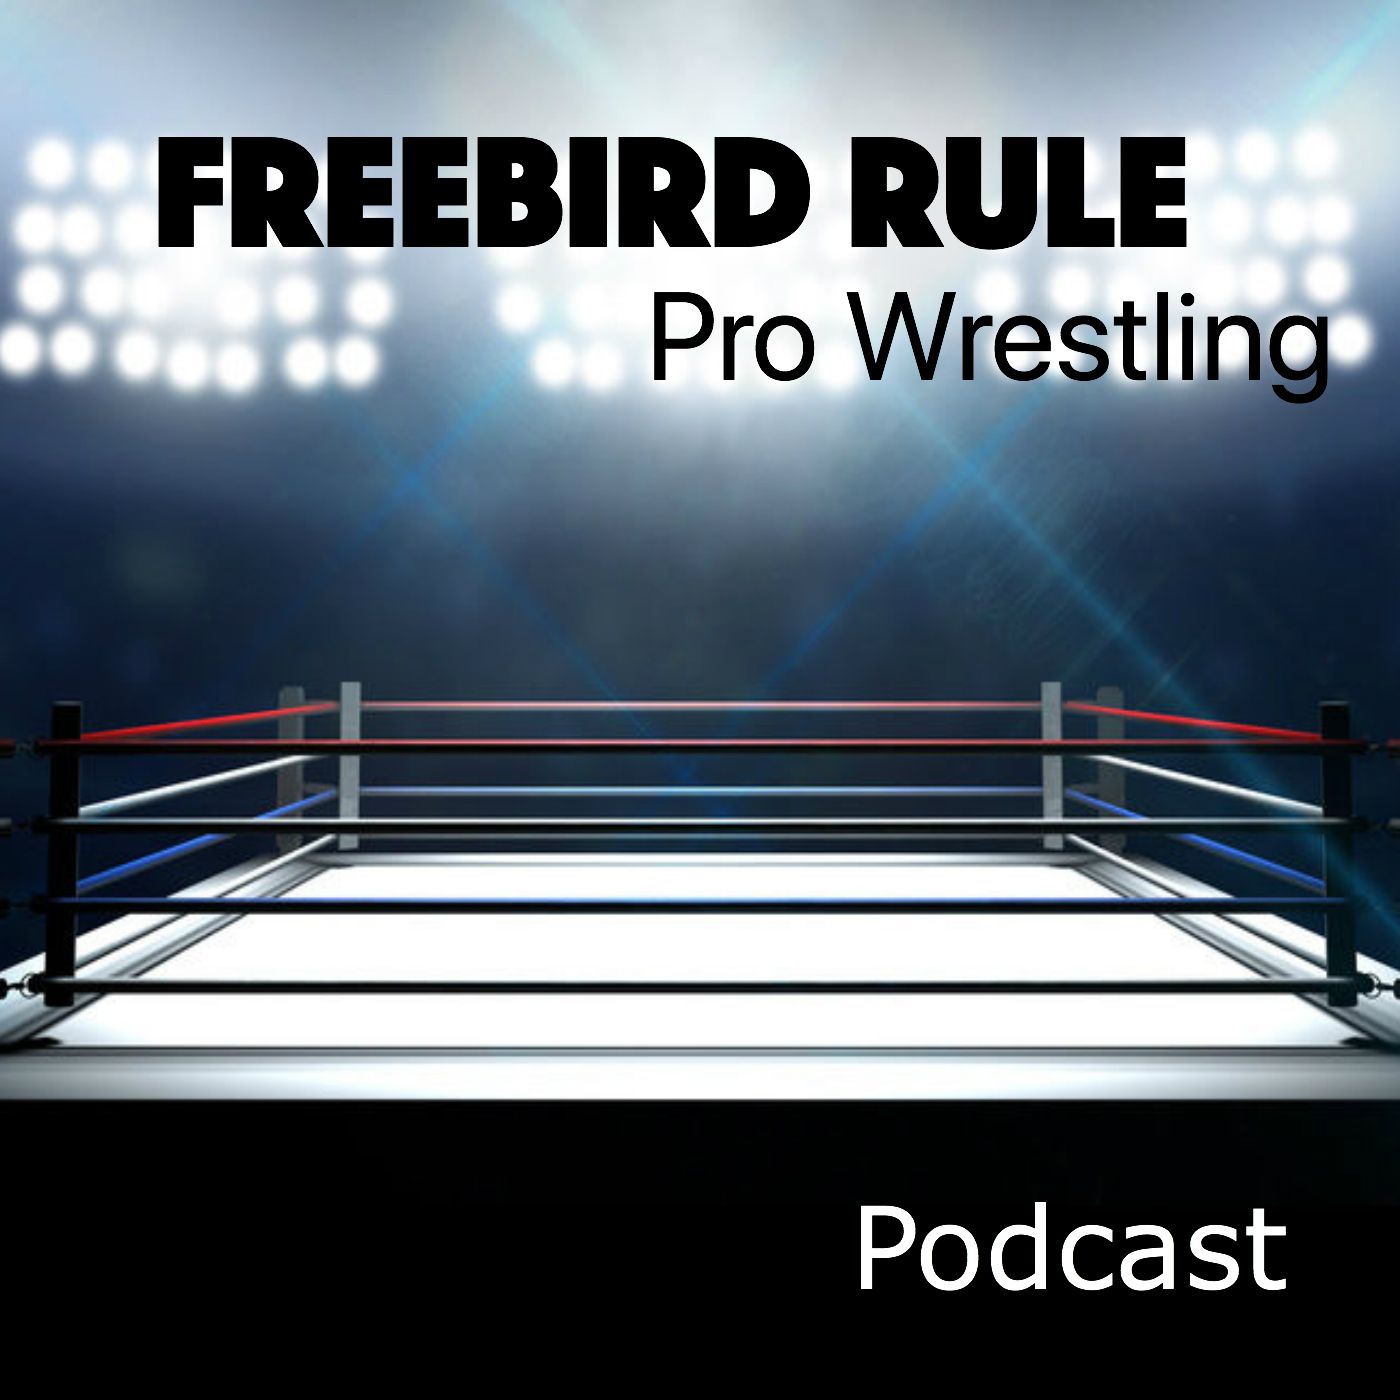 Freebird Rule Pro Wrestling Podcast